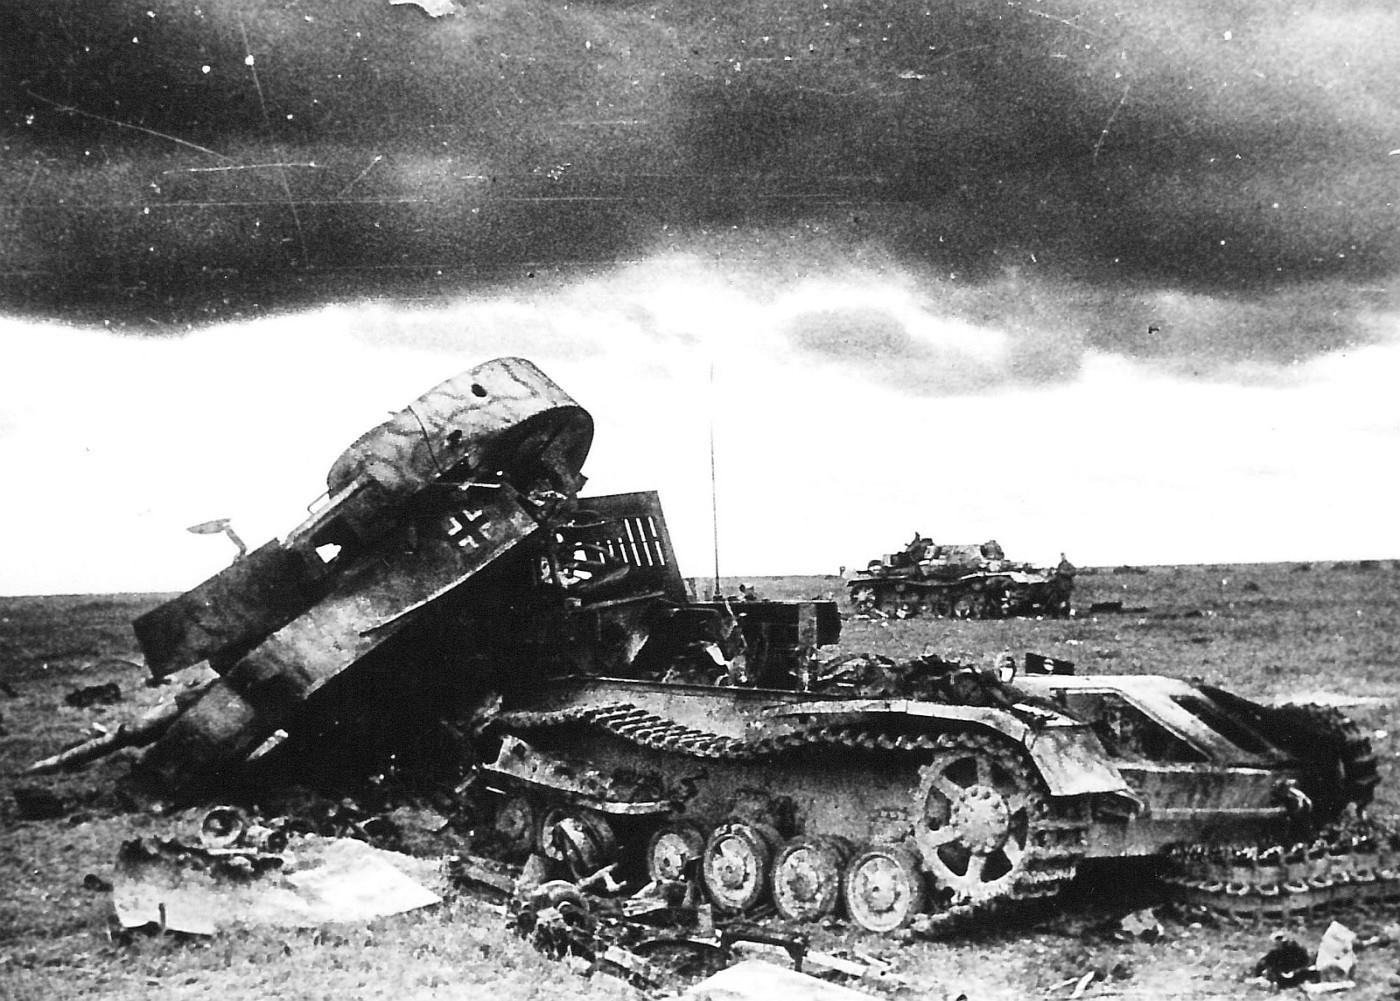 Destroyed Panzer 4